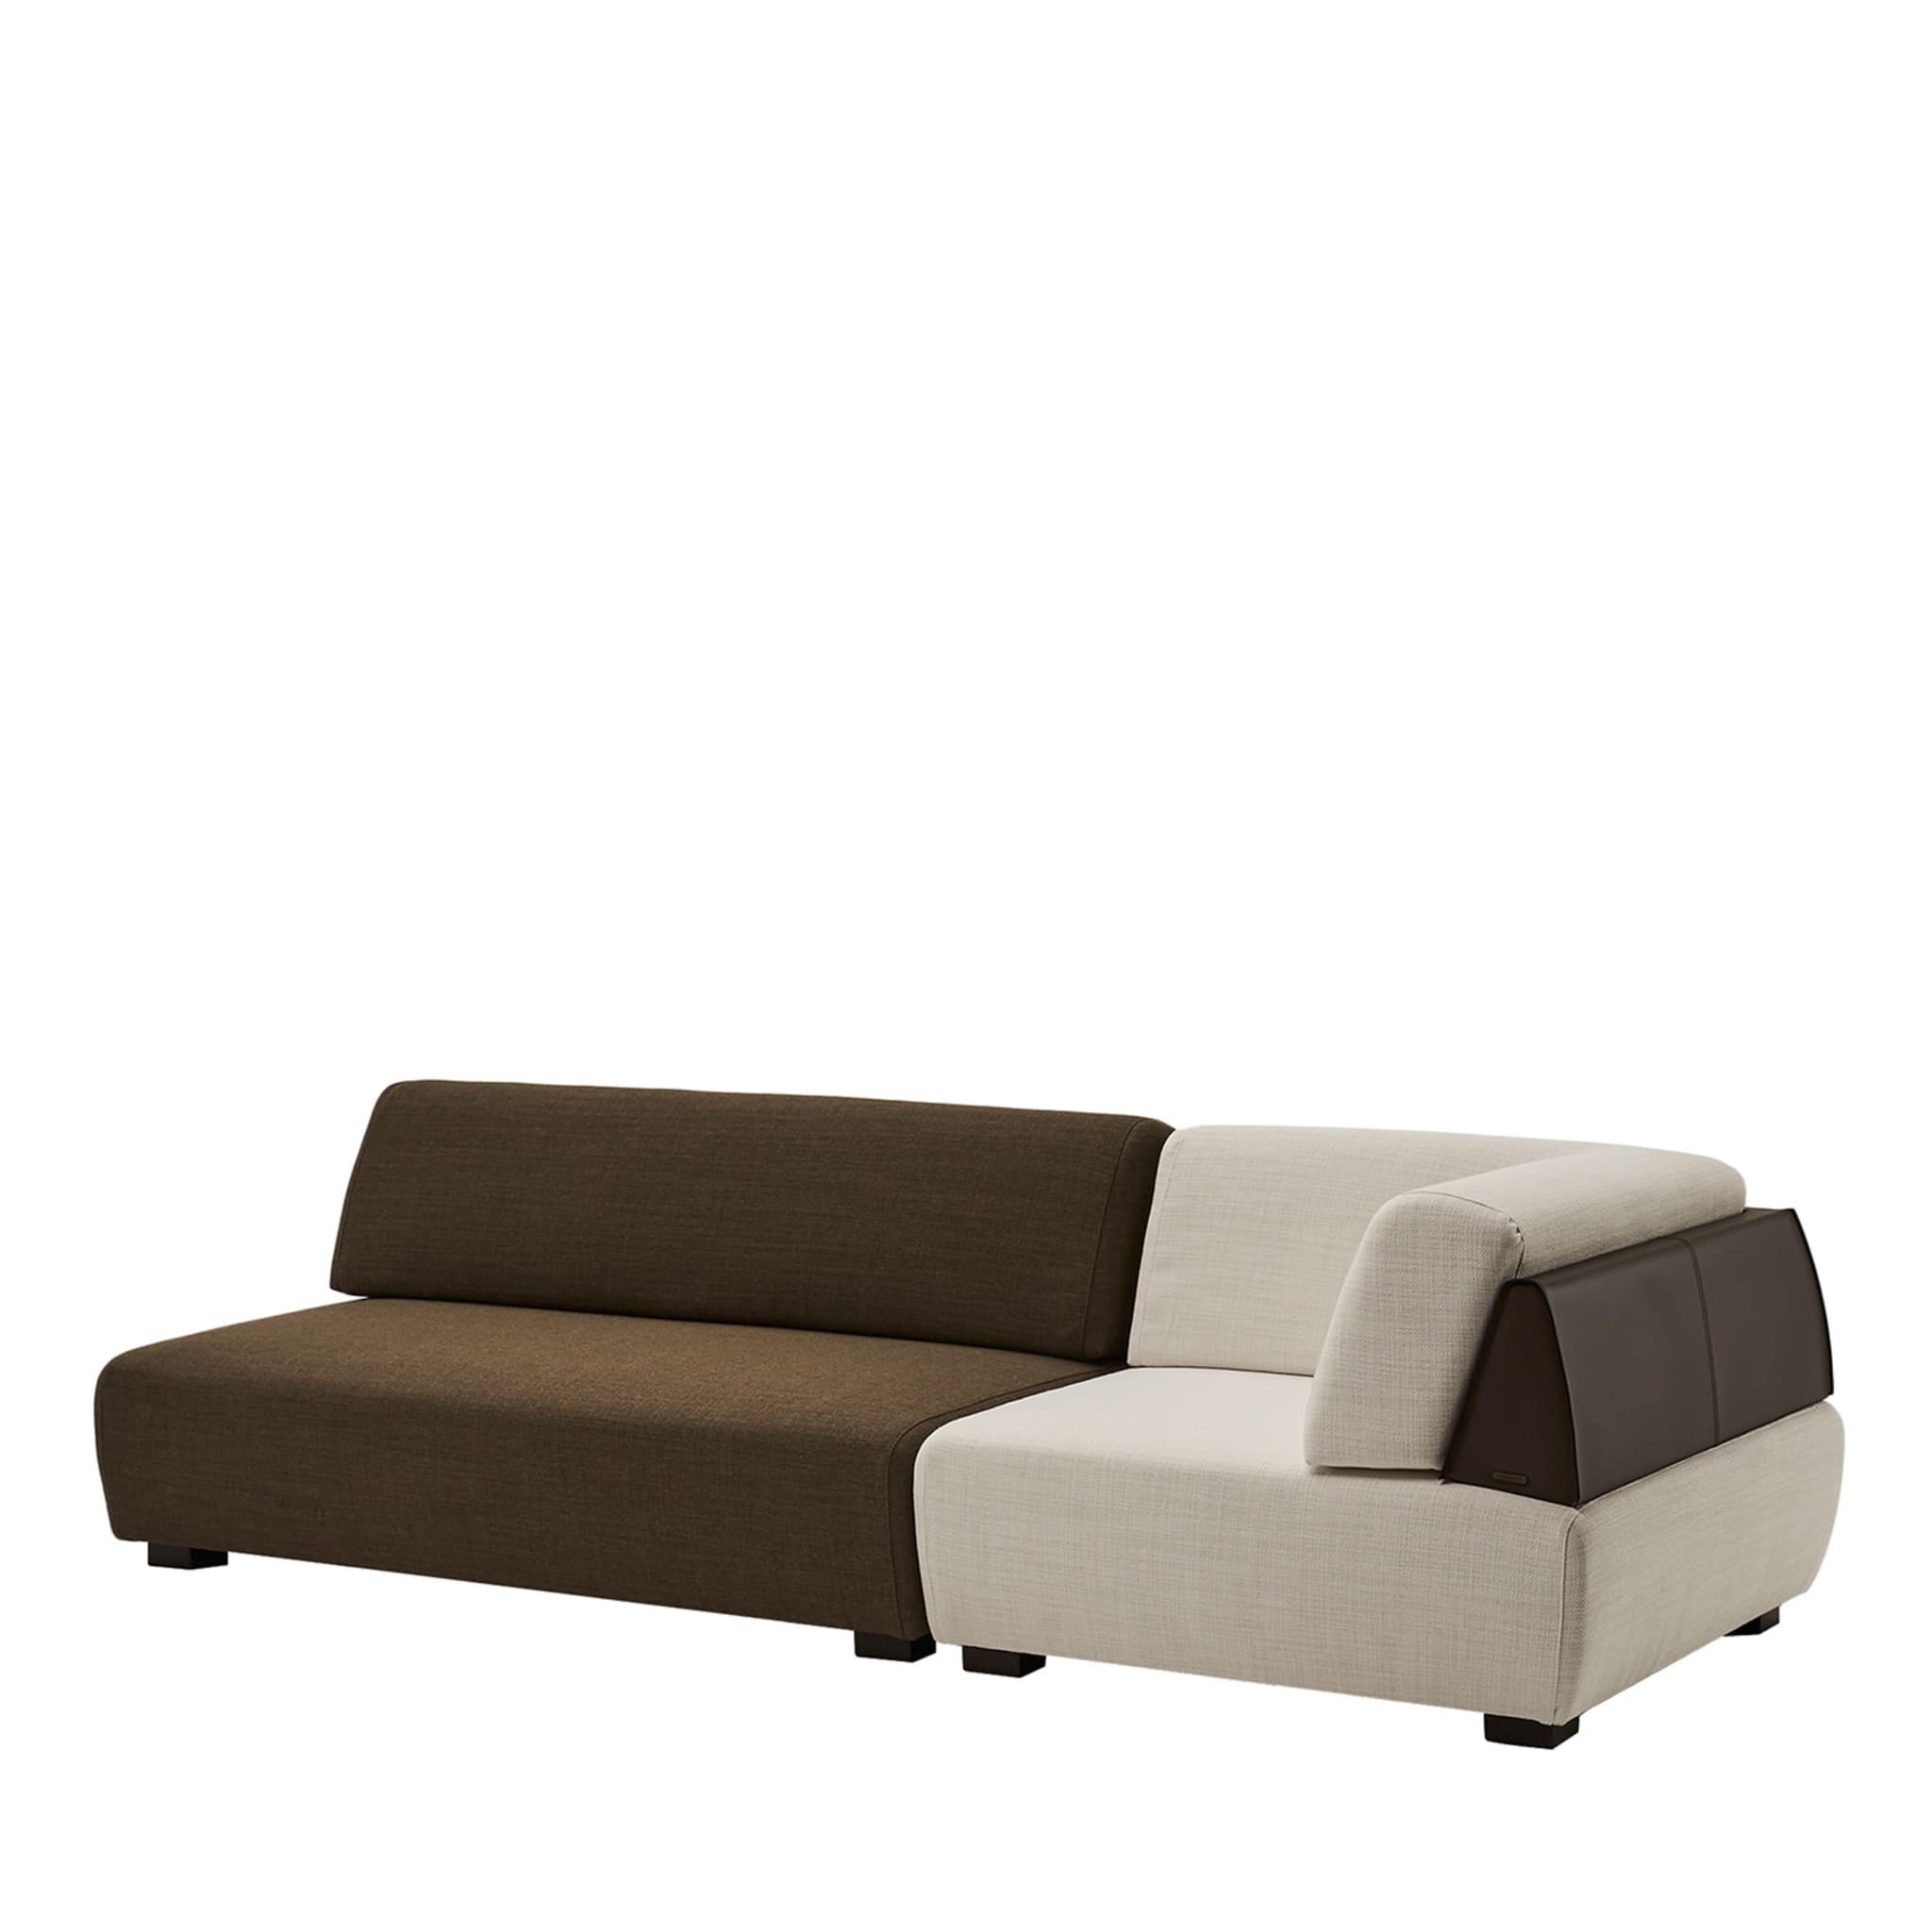 Mistral Tobacco & Beige Angular Sofa - Main view